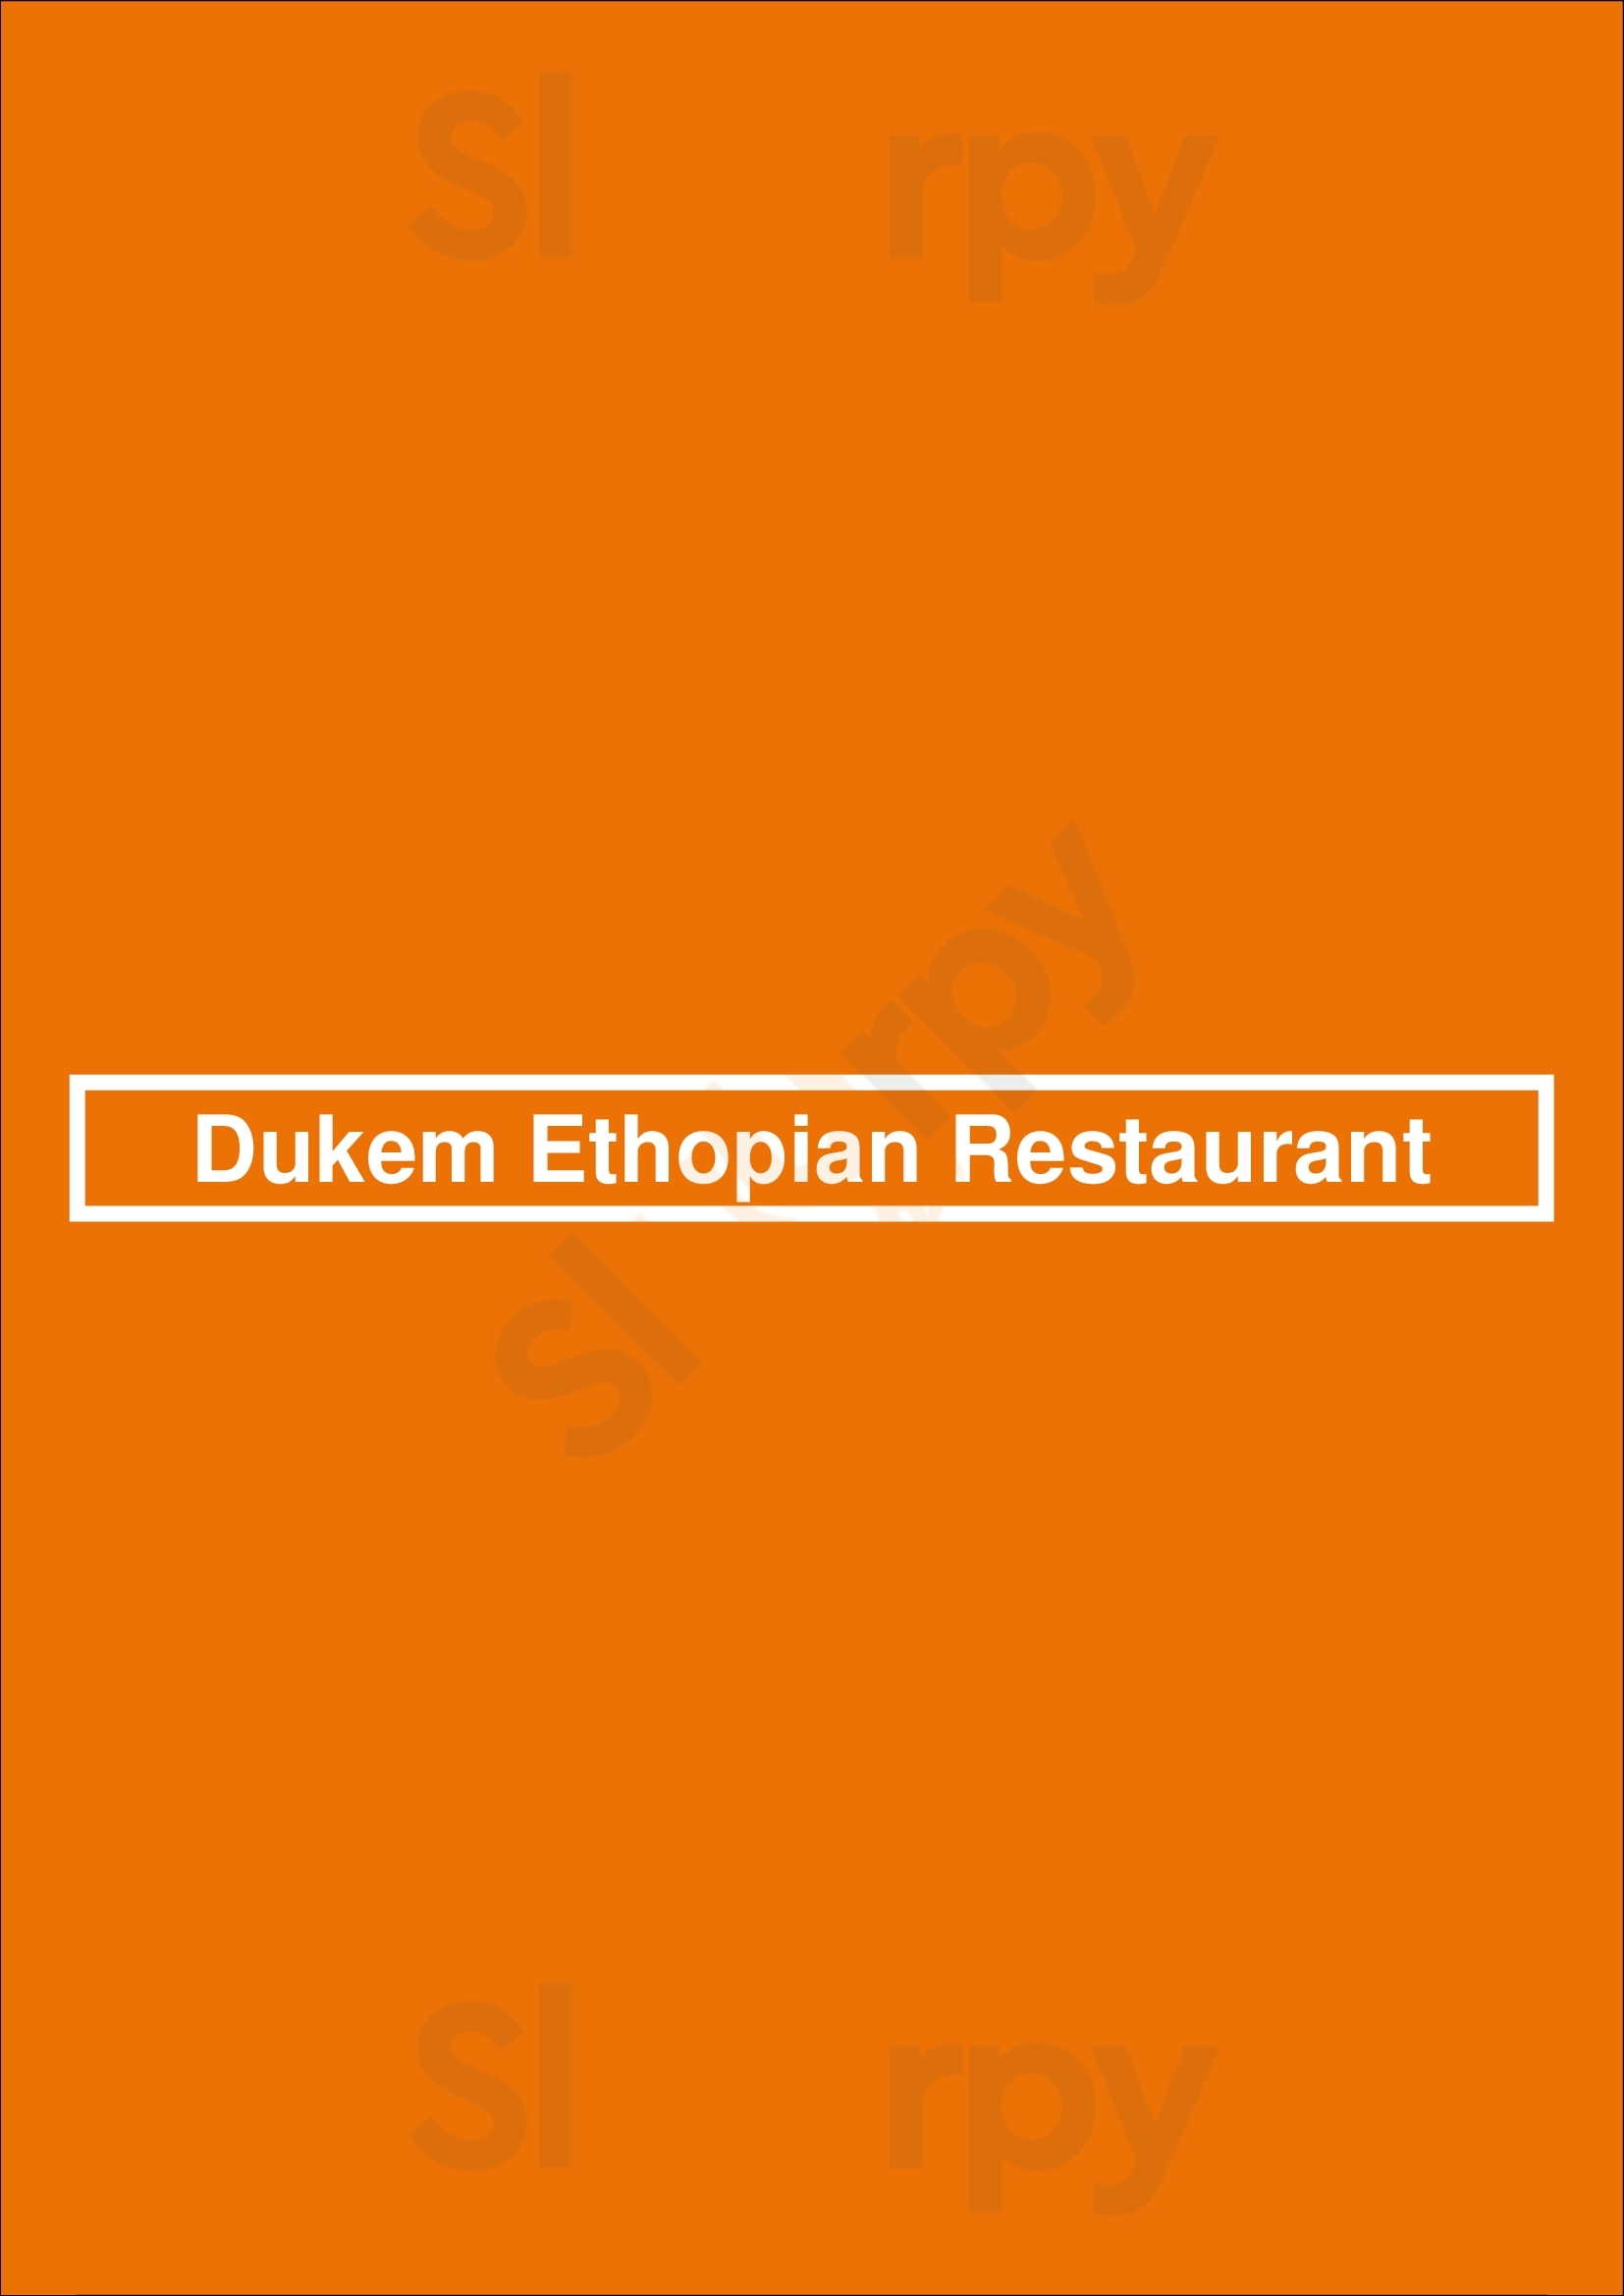 Dukem Ethopian Restaurant Baltimore Menu - 1